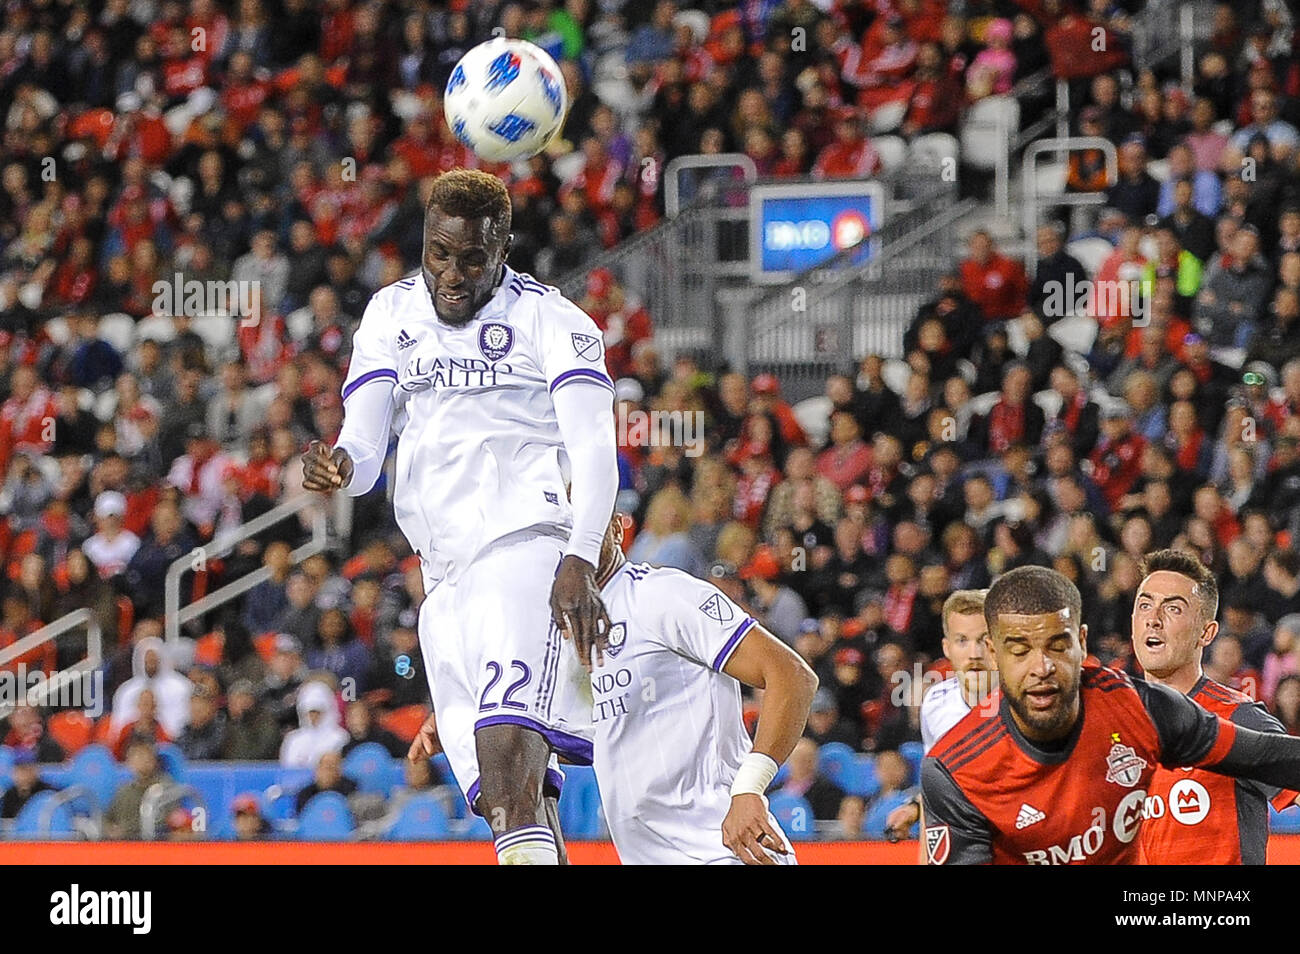 Lamine Sané (22) seen kicking the ball by head during 2018 MLS Regular Season match between Toronto FC (Canada) and  Orlando City SC (USA) at BMO Field (Score 2:1) Stock Photo